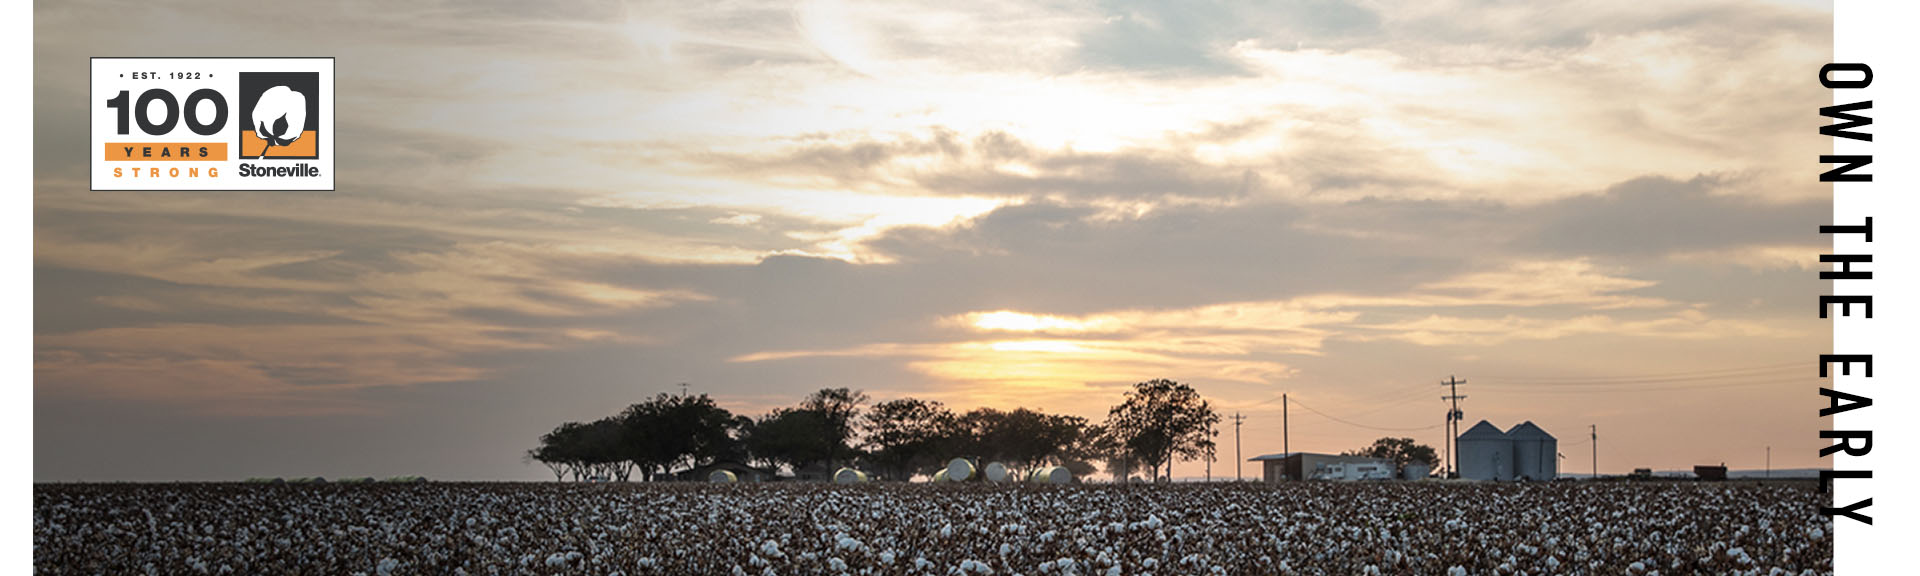 Cotton field under a sunset